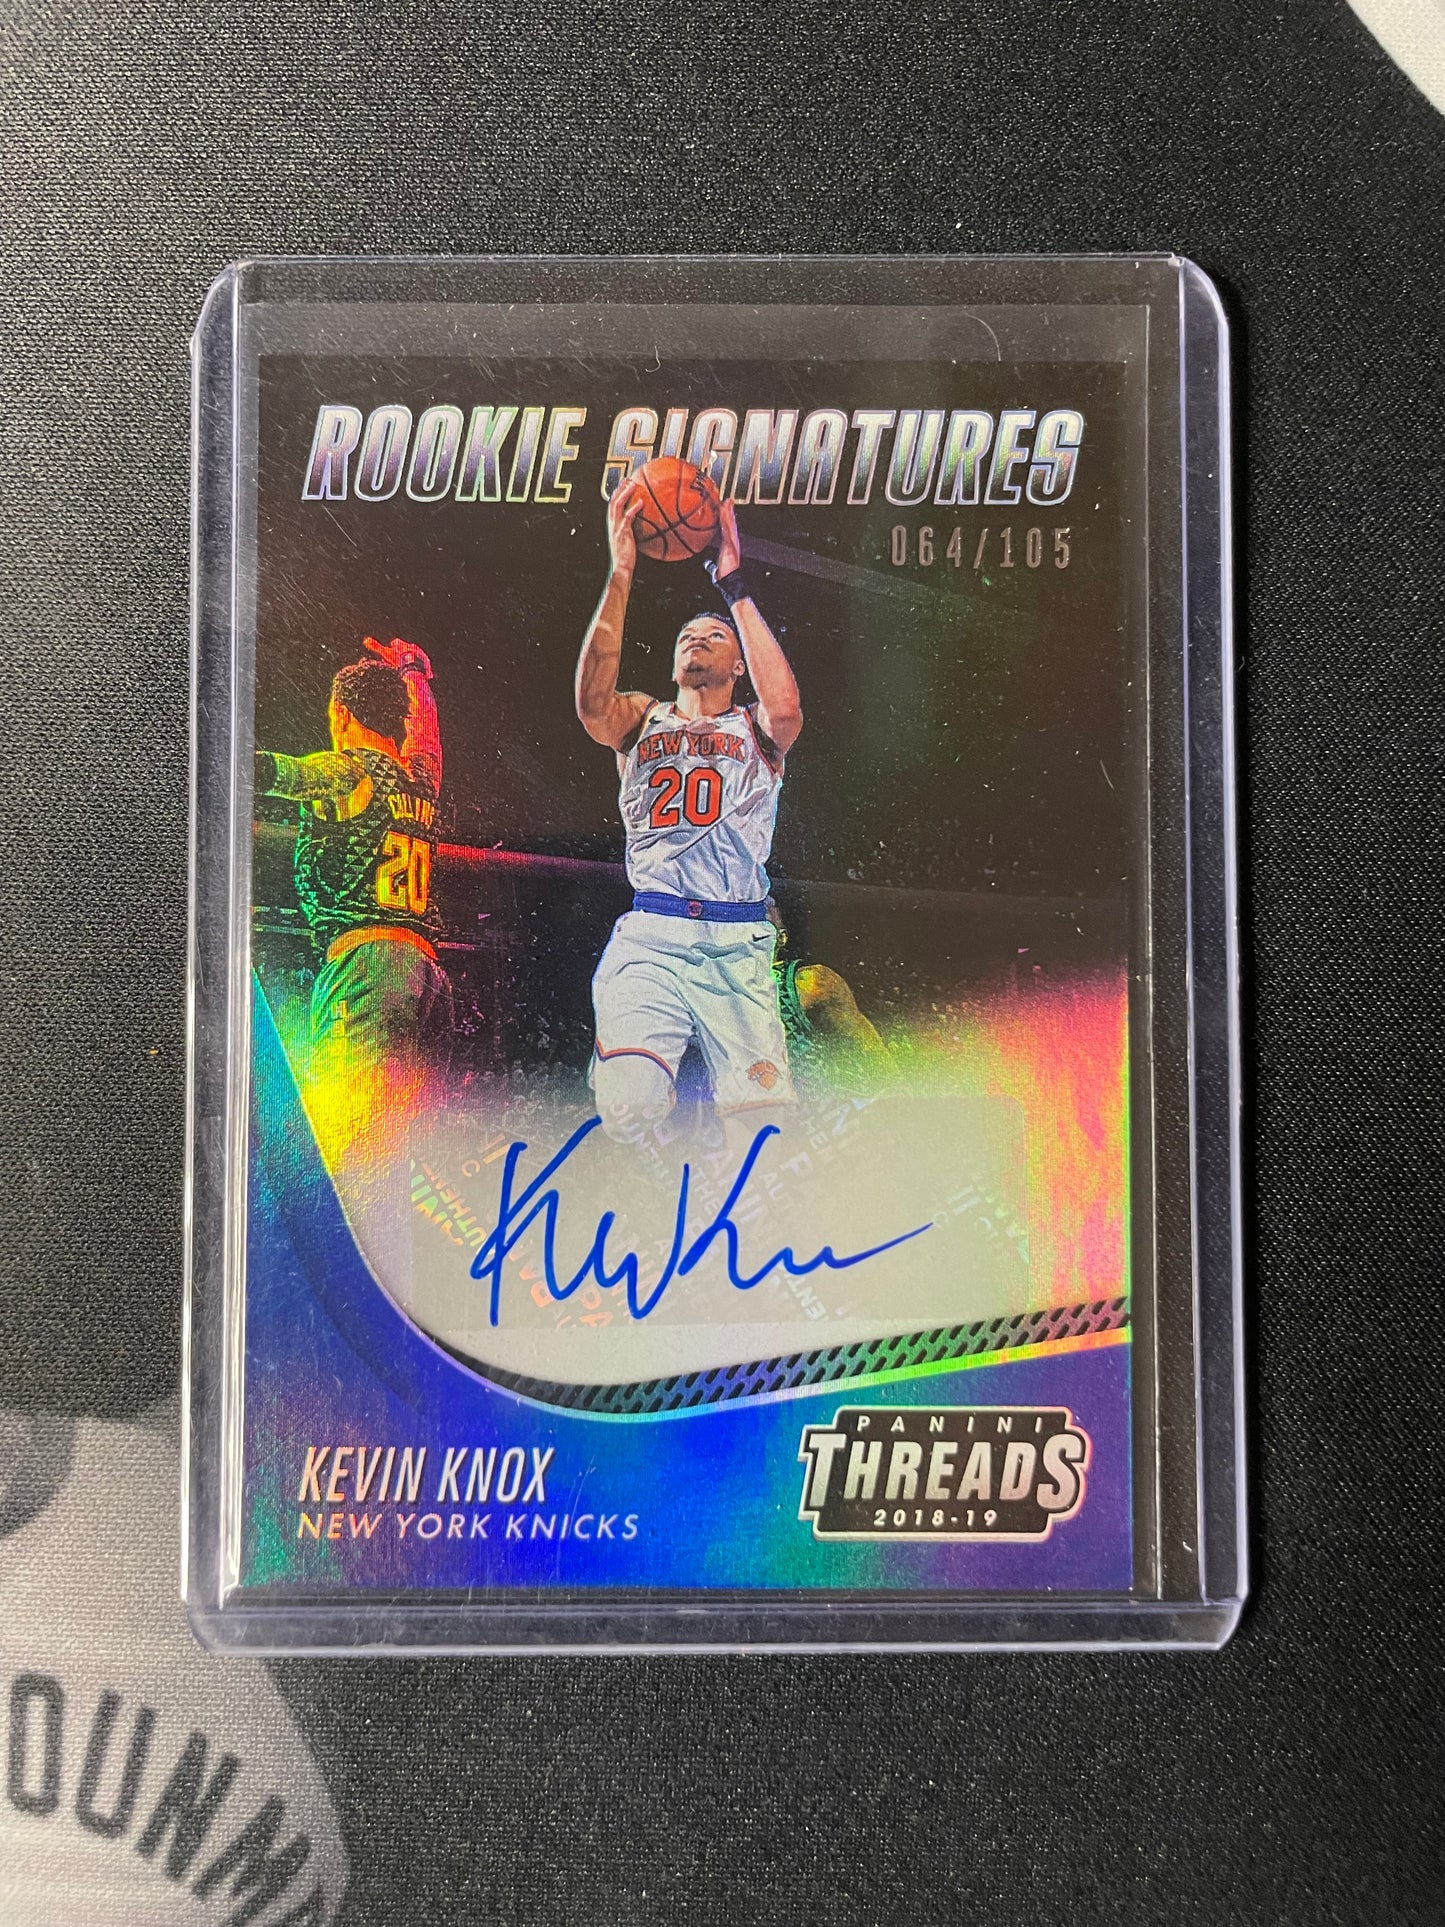 2018/19 Panini Threads #9 Kevin Knox New York Knicks Rookie Signatures 064/105